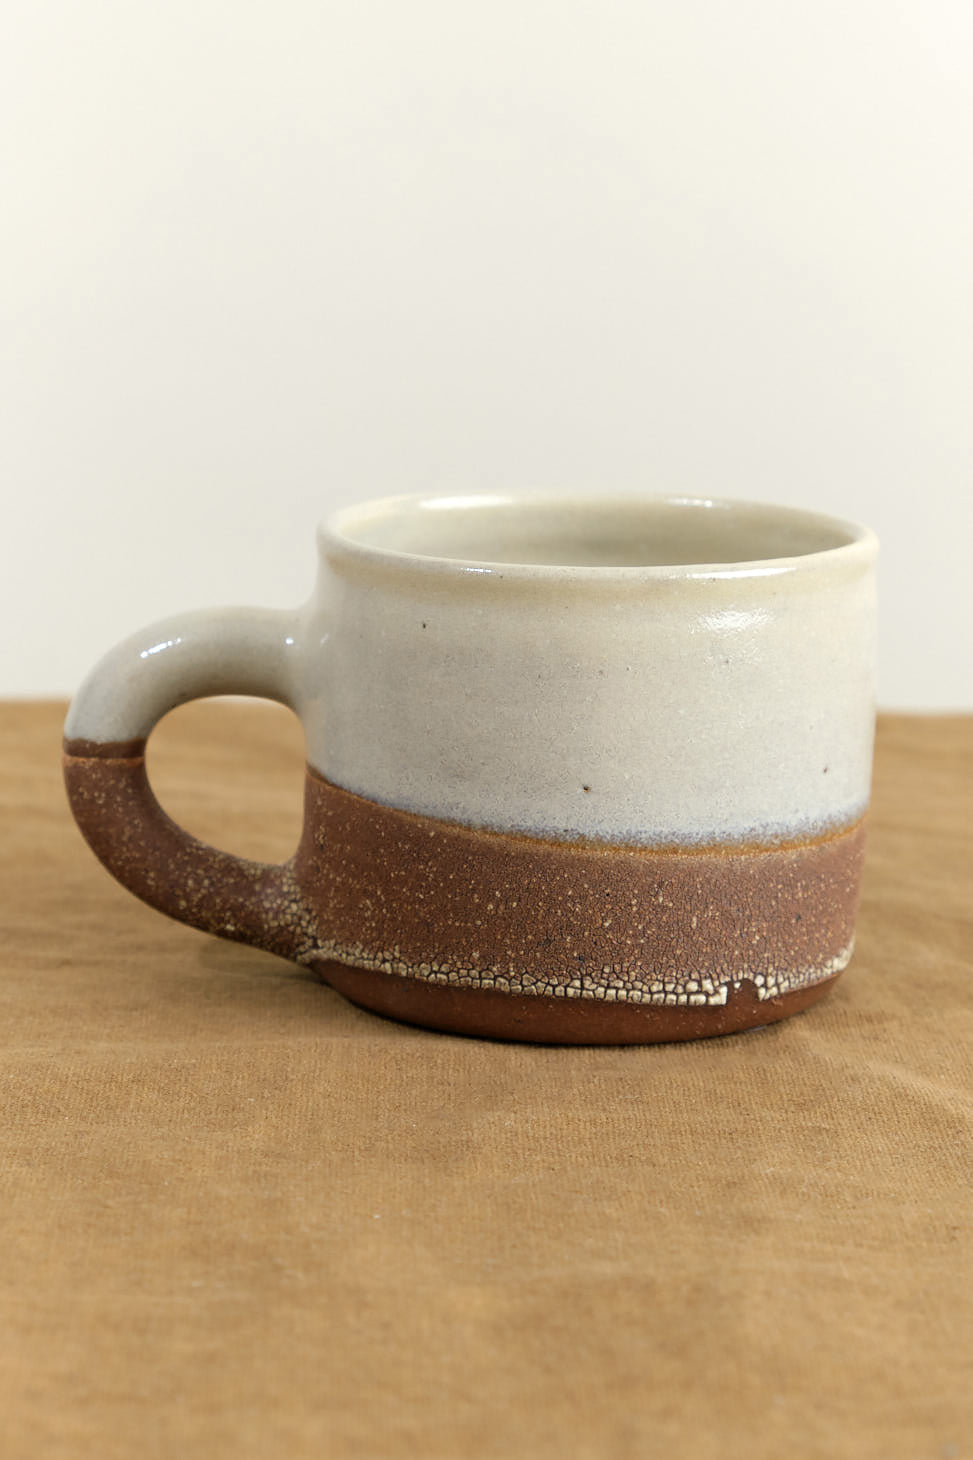 Handle on Stoneware Coffee Mug in Brown Stoneware